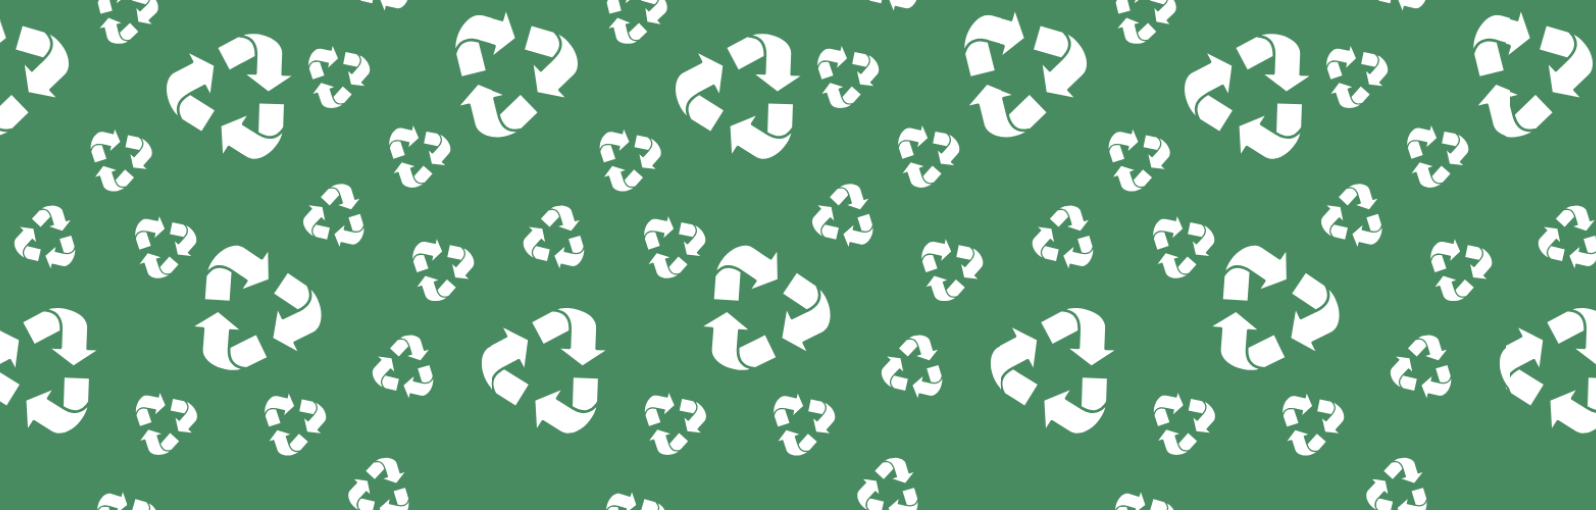 recycling logos